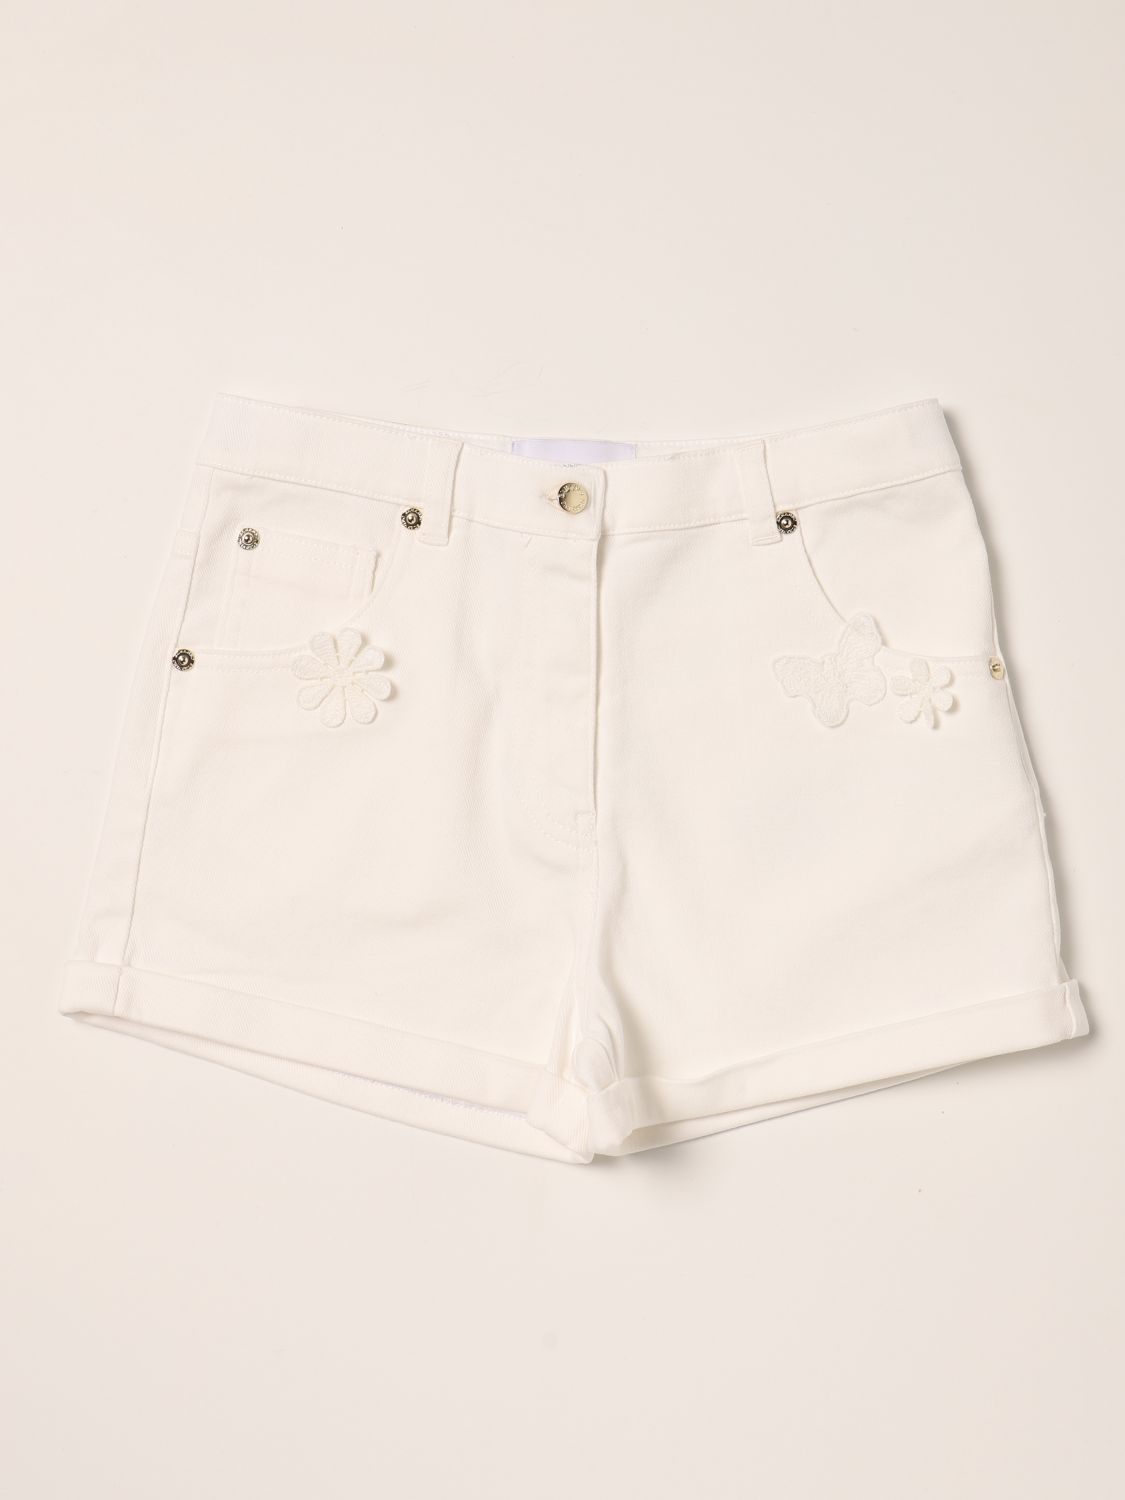 Short Ermanno Scervino: Ermanno scervino stretch cotton shorts white 1